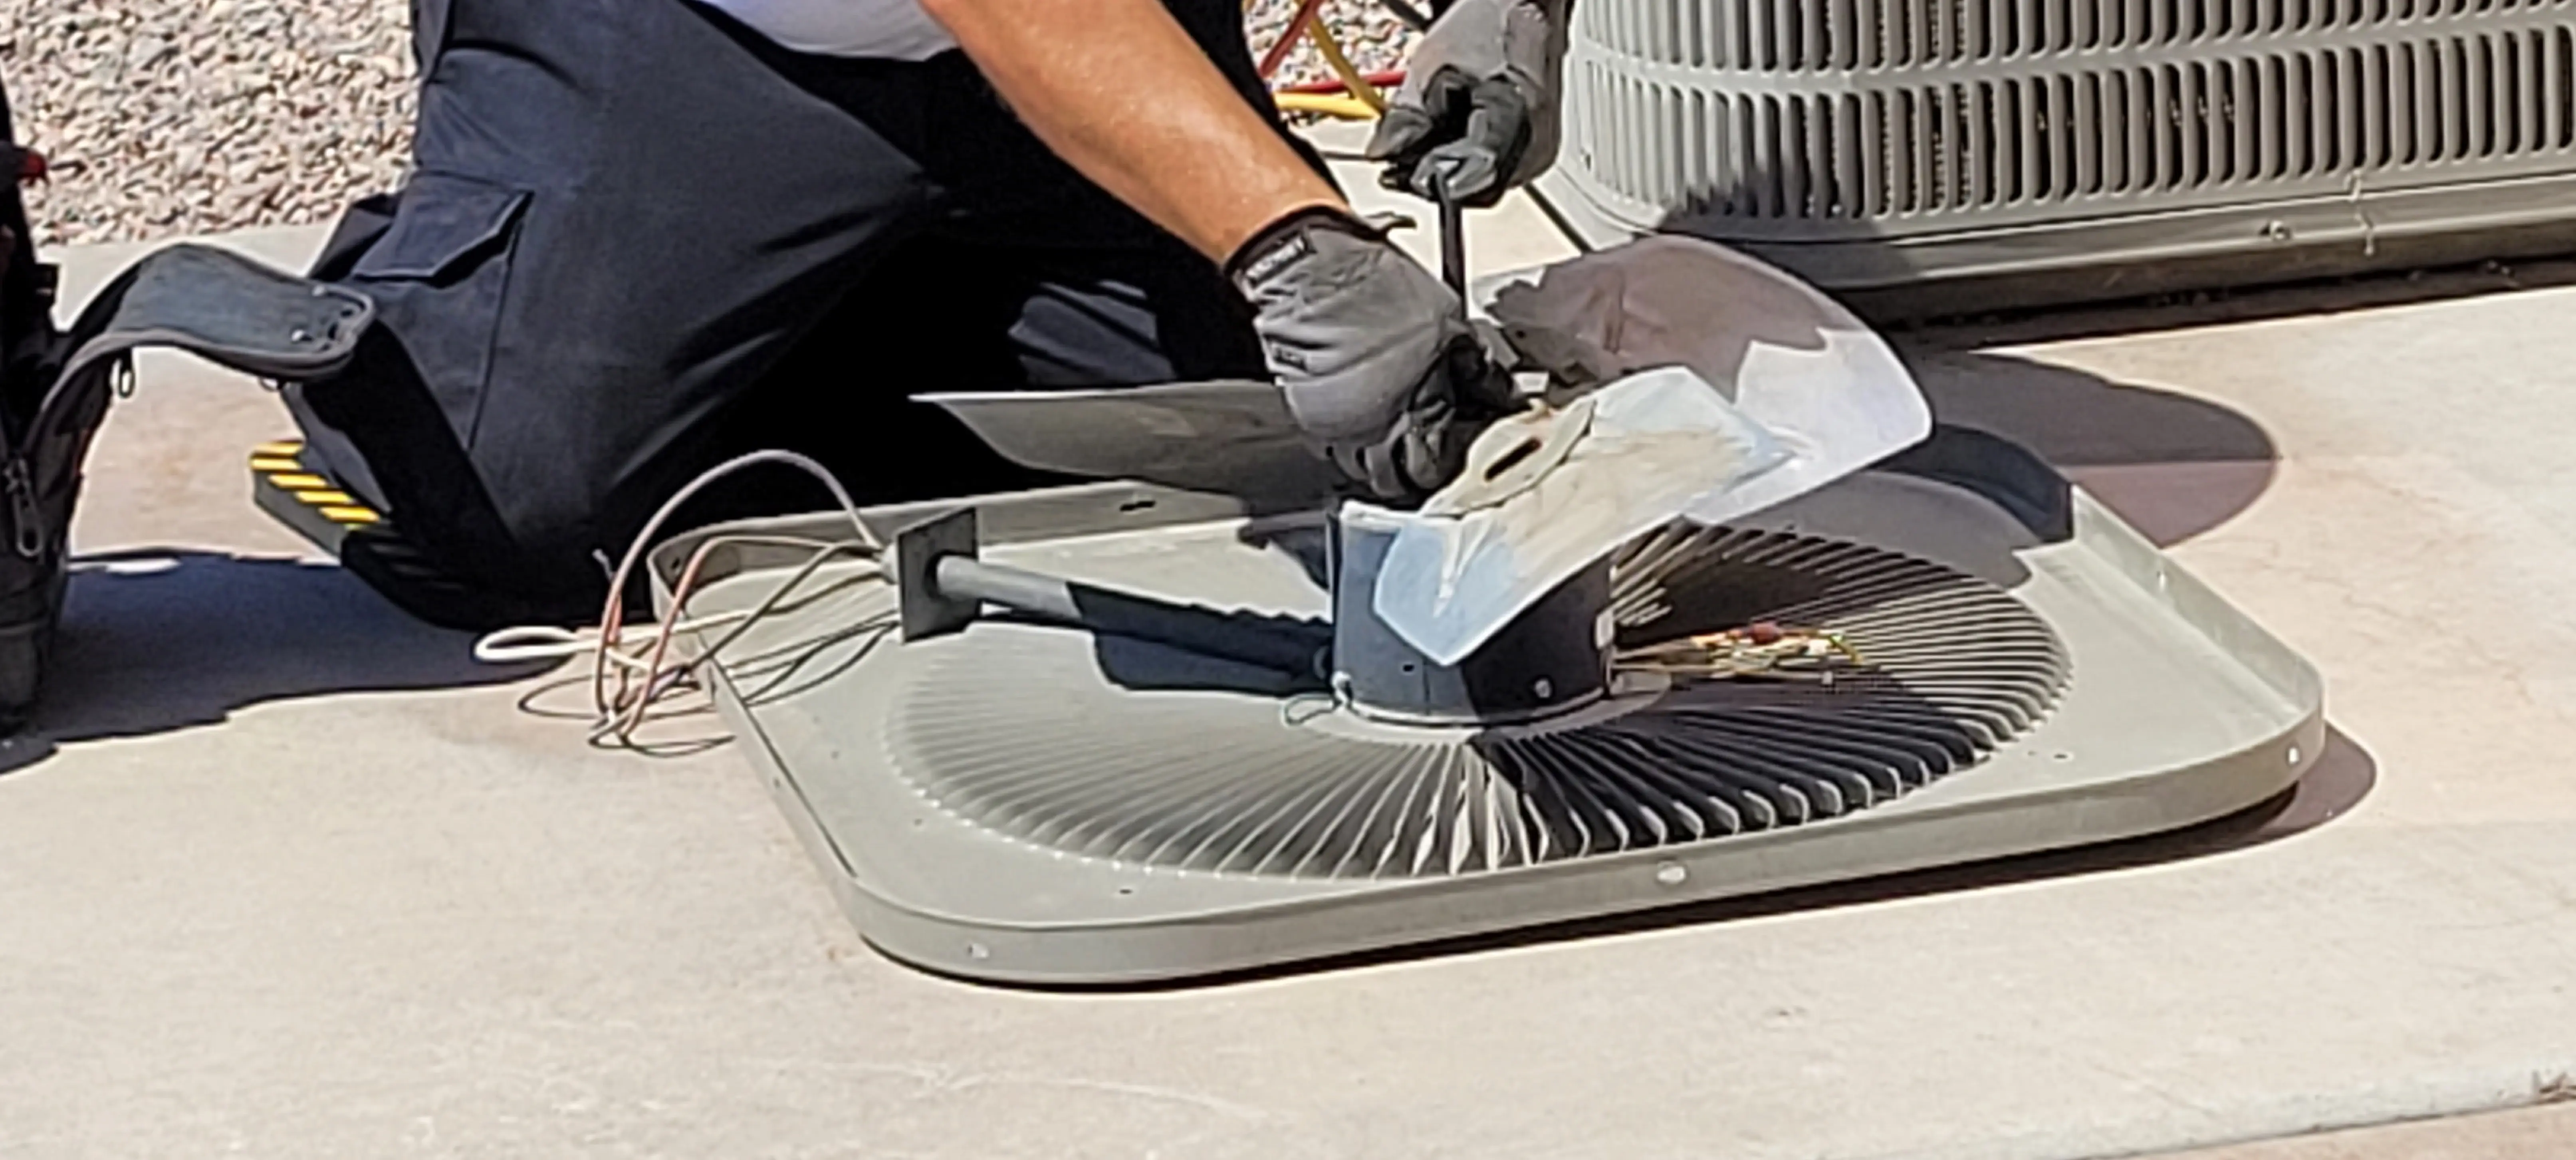 Air-Conditioning-Repair--in-Atascosa-Texas-Air-Conditioning-Repair-4296816-image